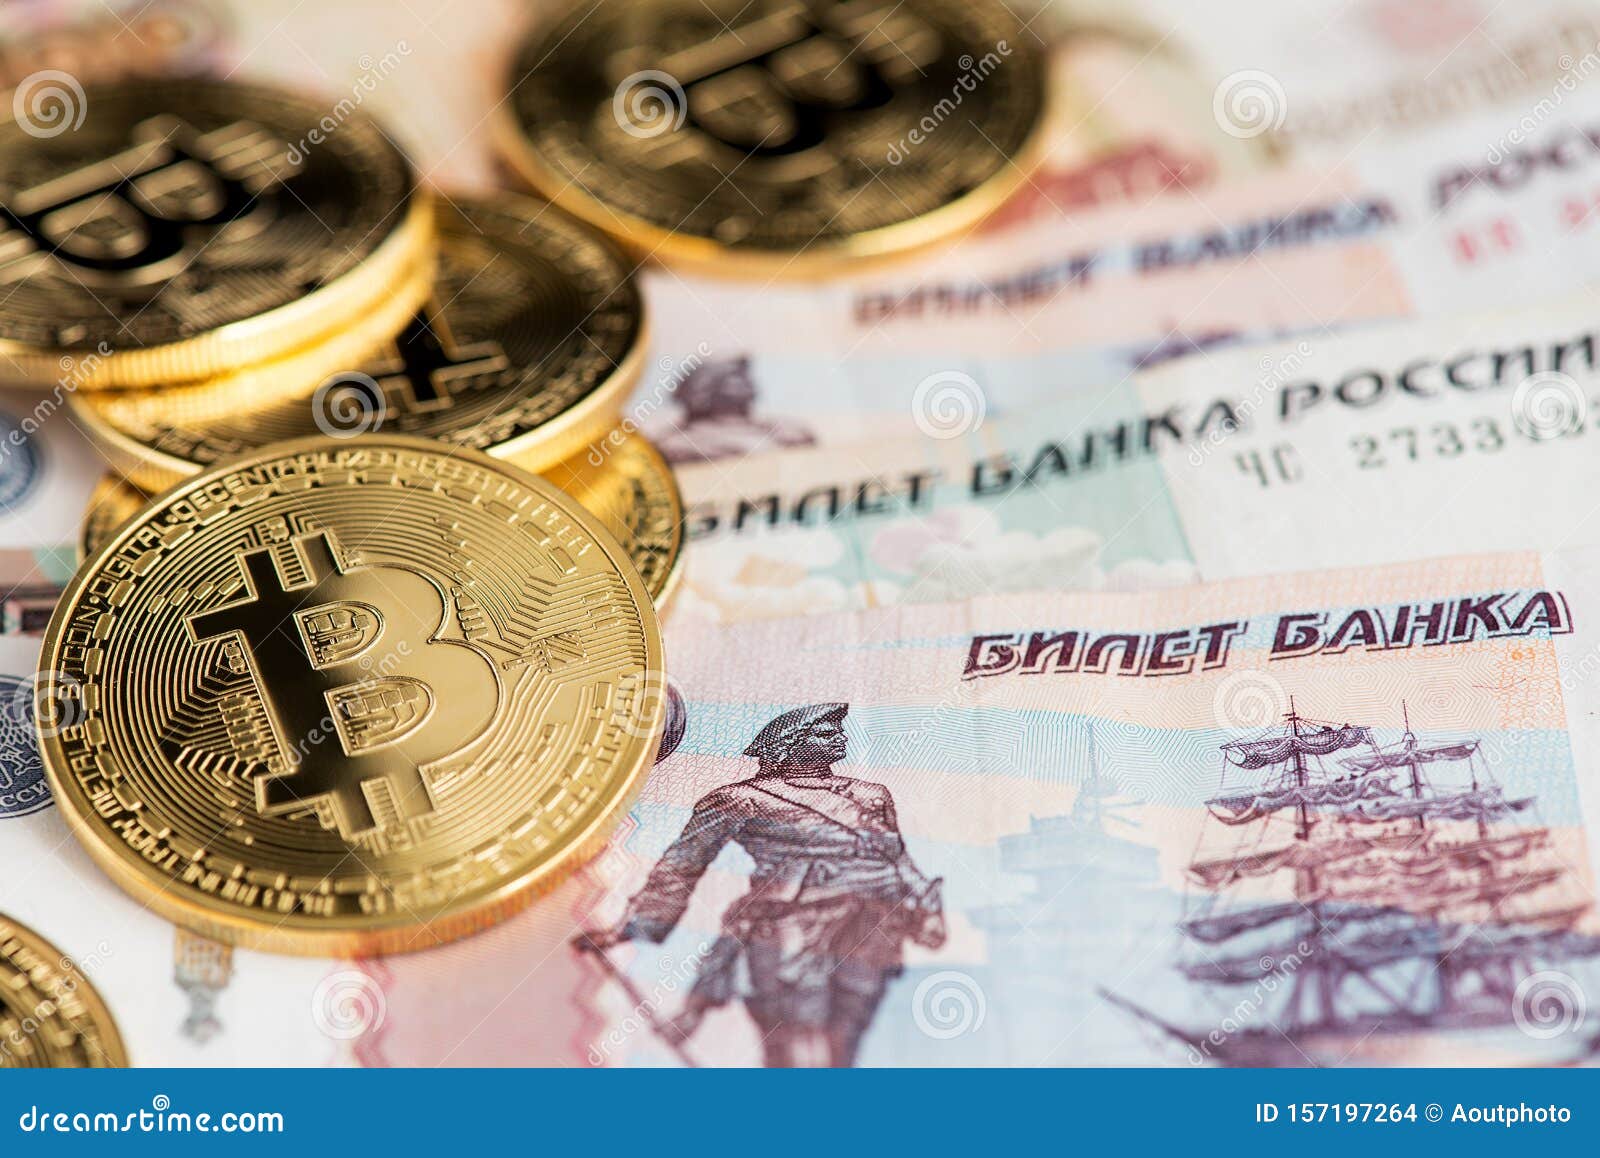 Обменять биткоин на рубли калькулятор онлайн bk info